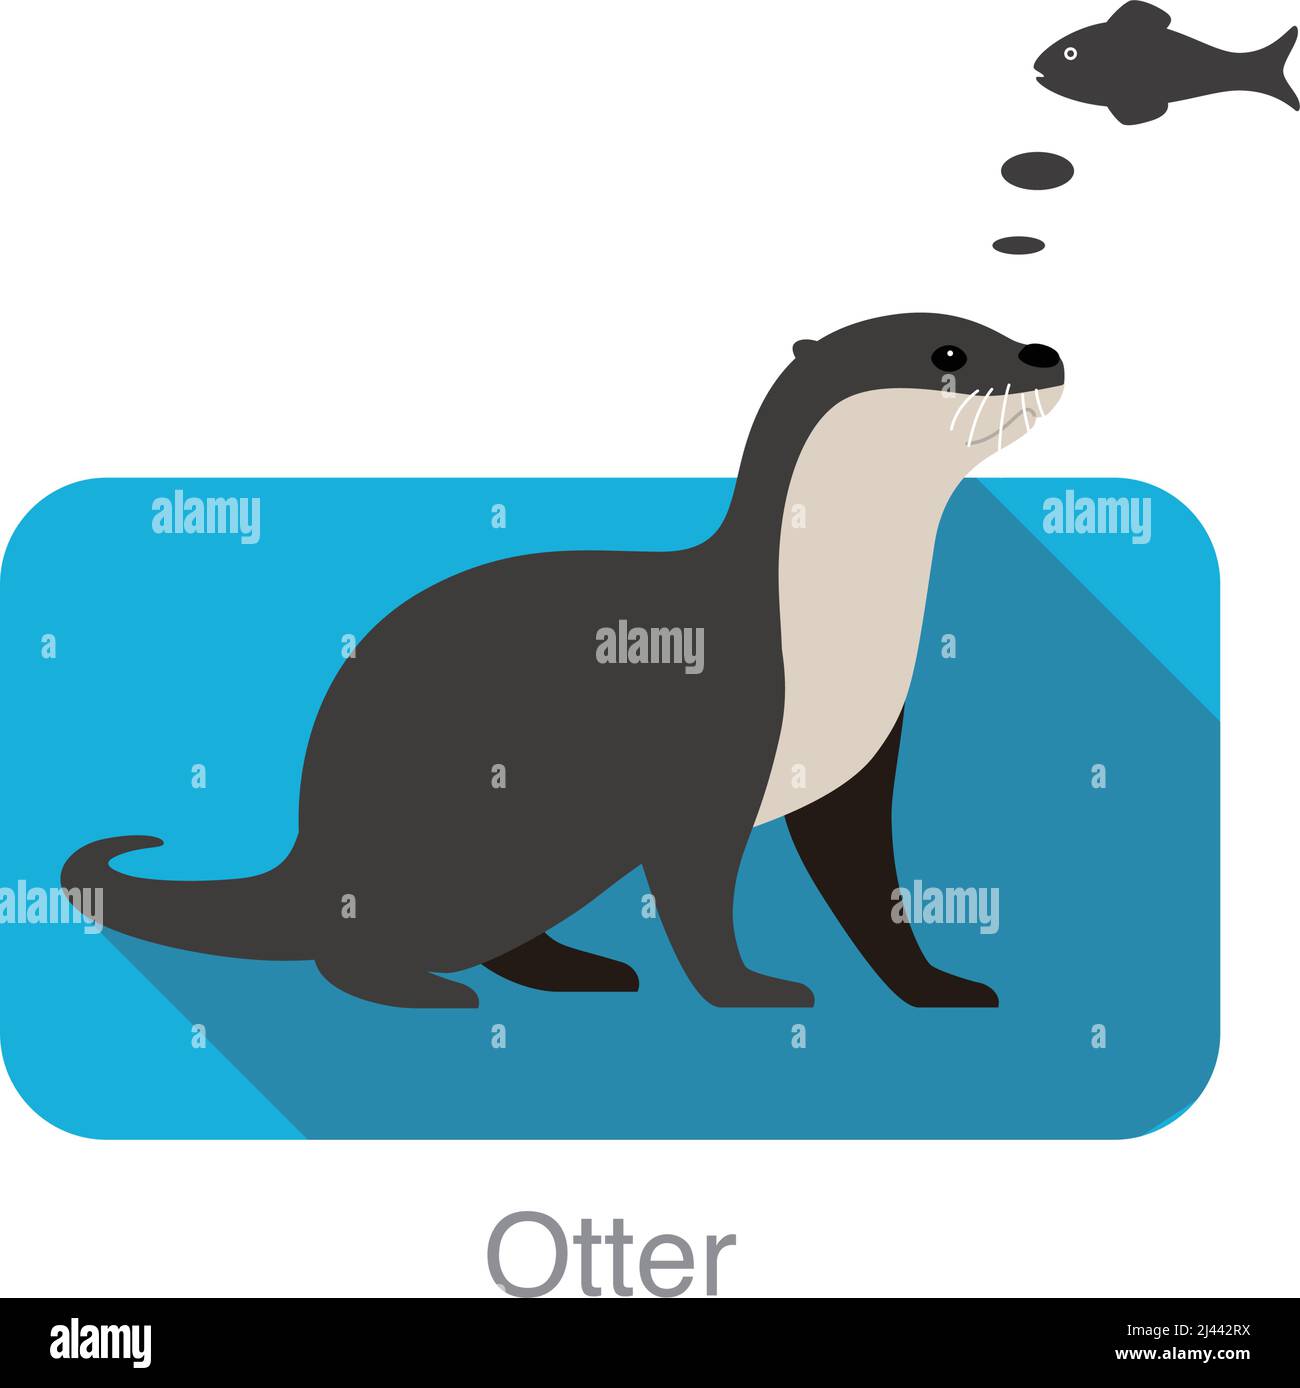 otter will Fisch essen, Vektorgrafik Stock Vektor